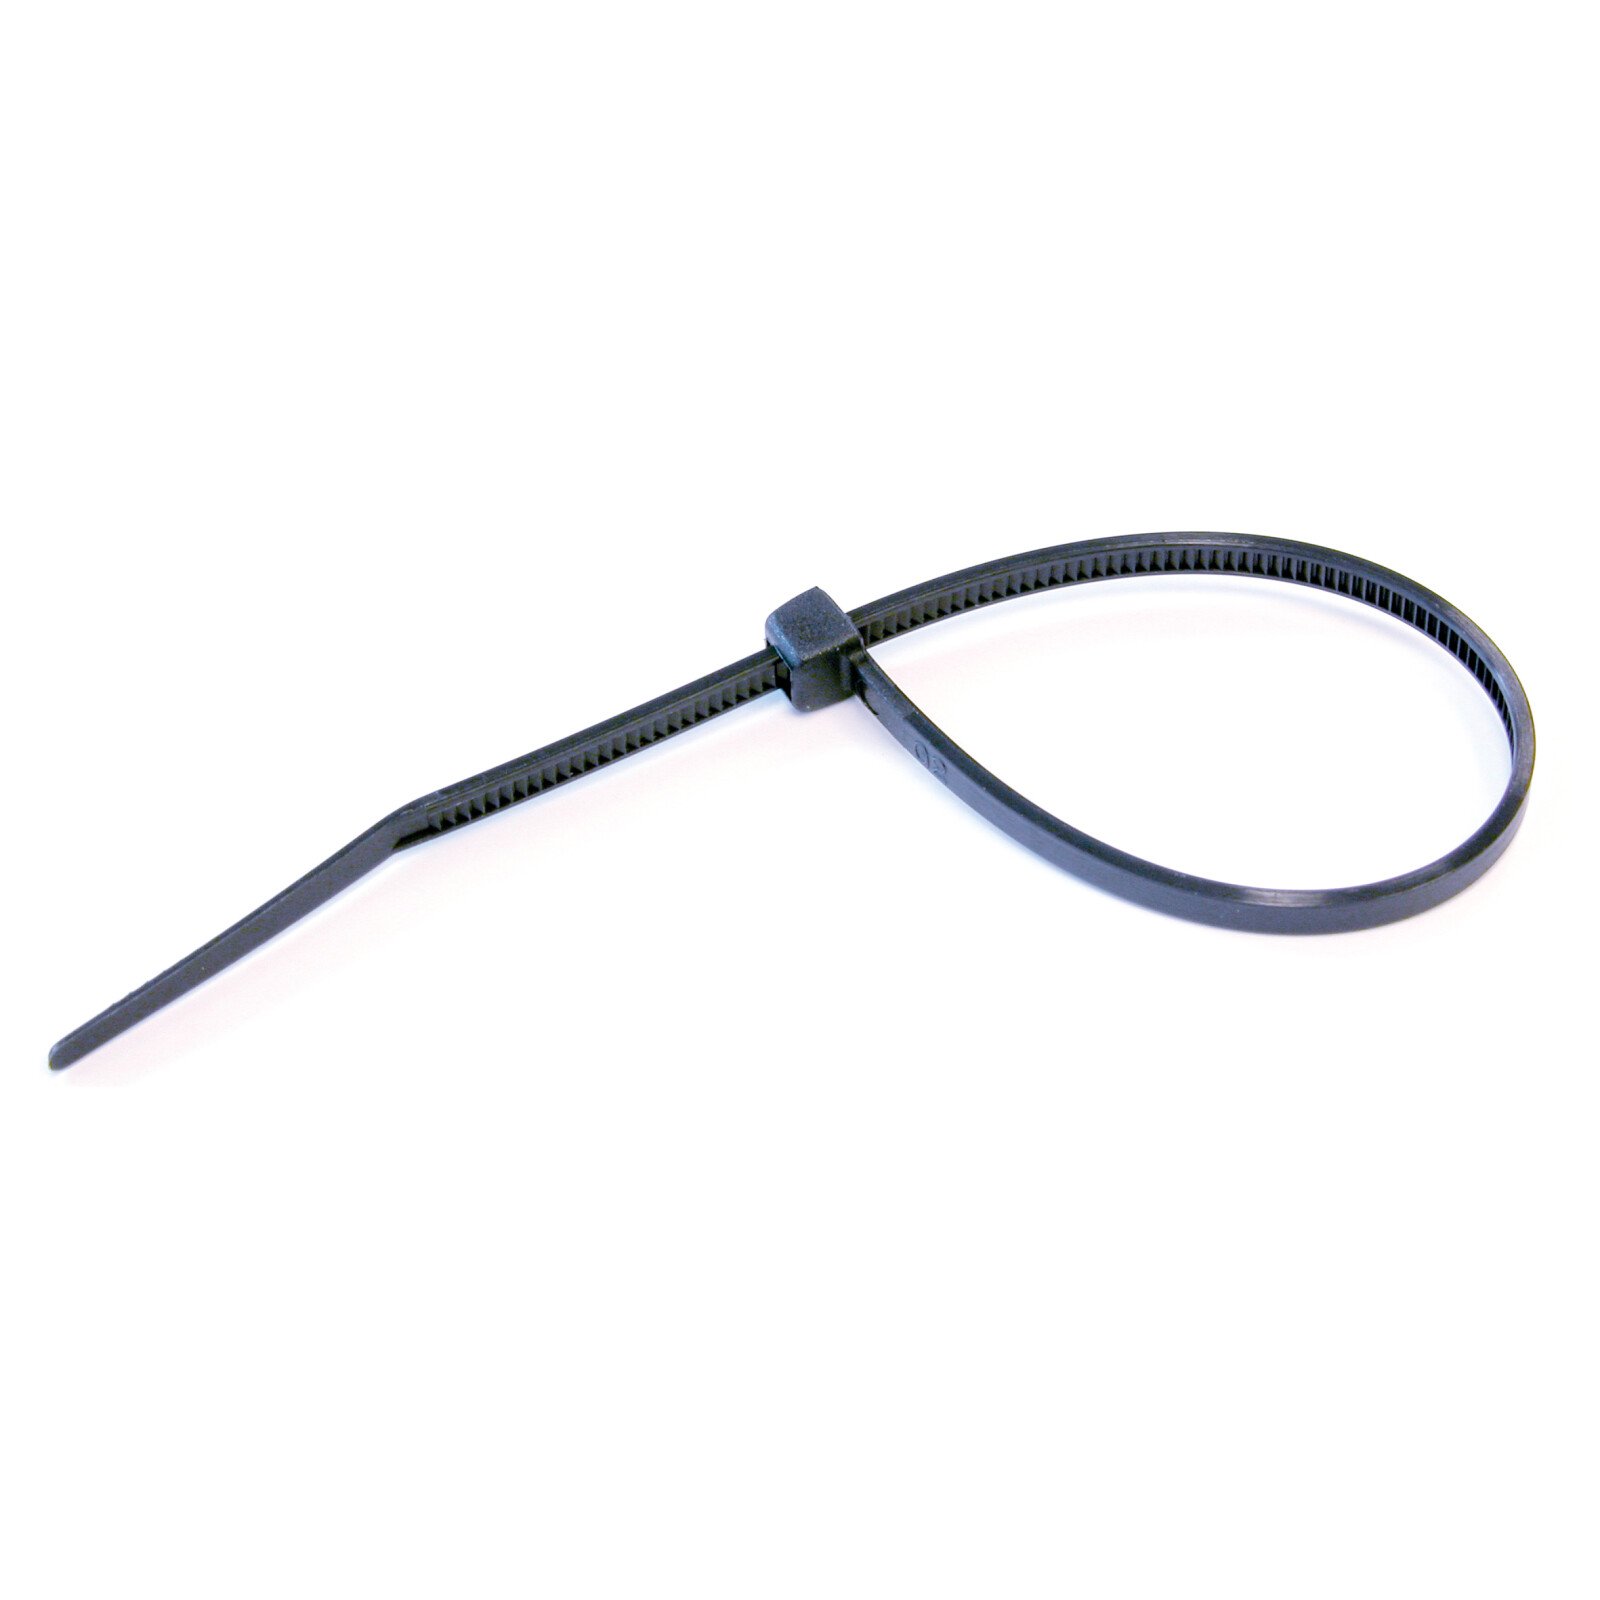 Cable ties 1pcs 0,48x37cm - Black thumb